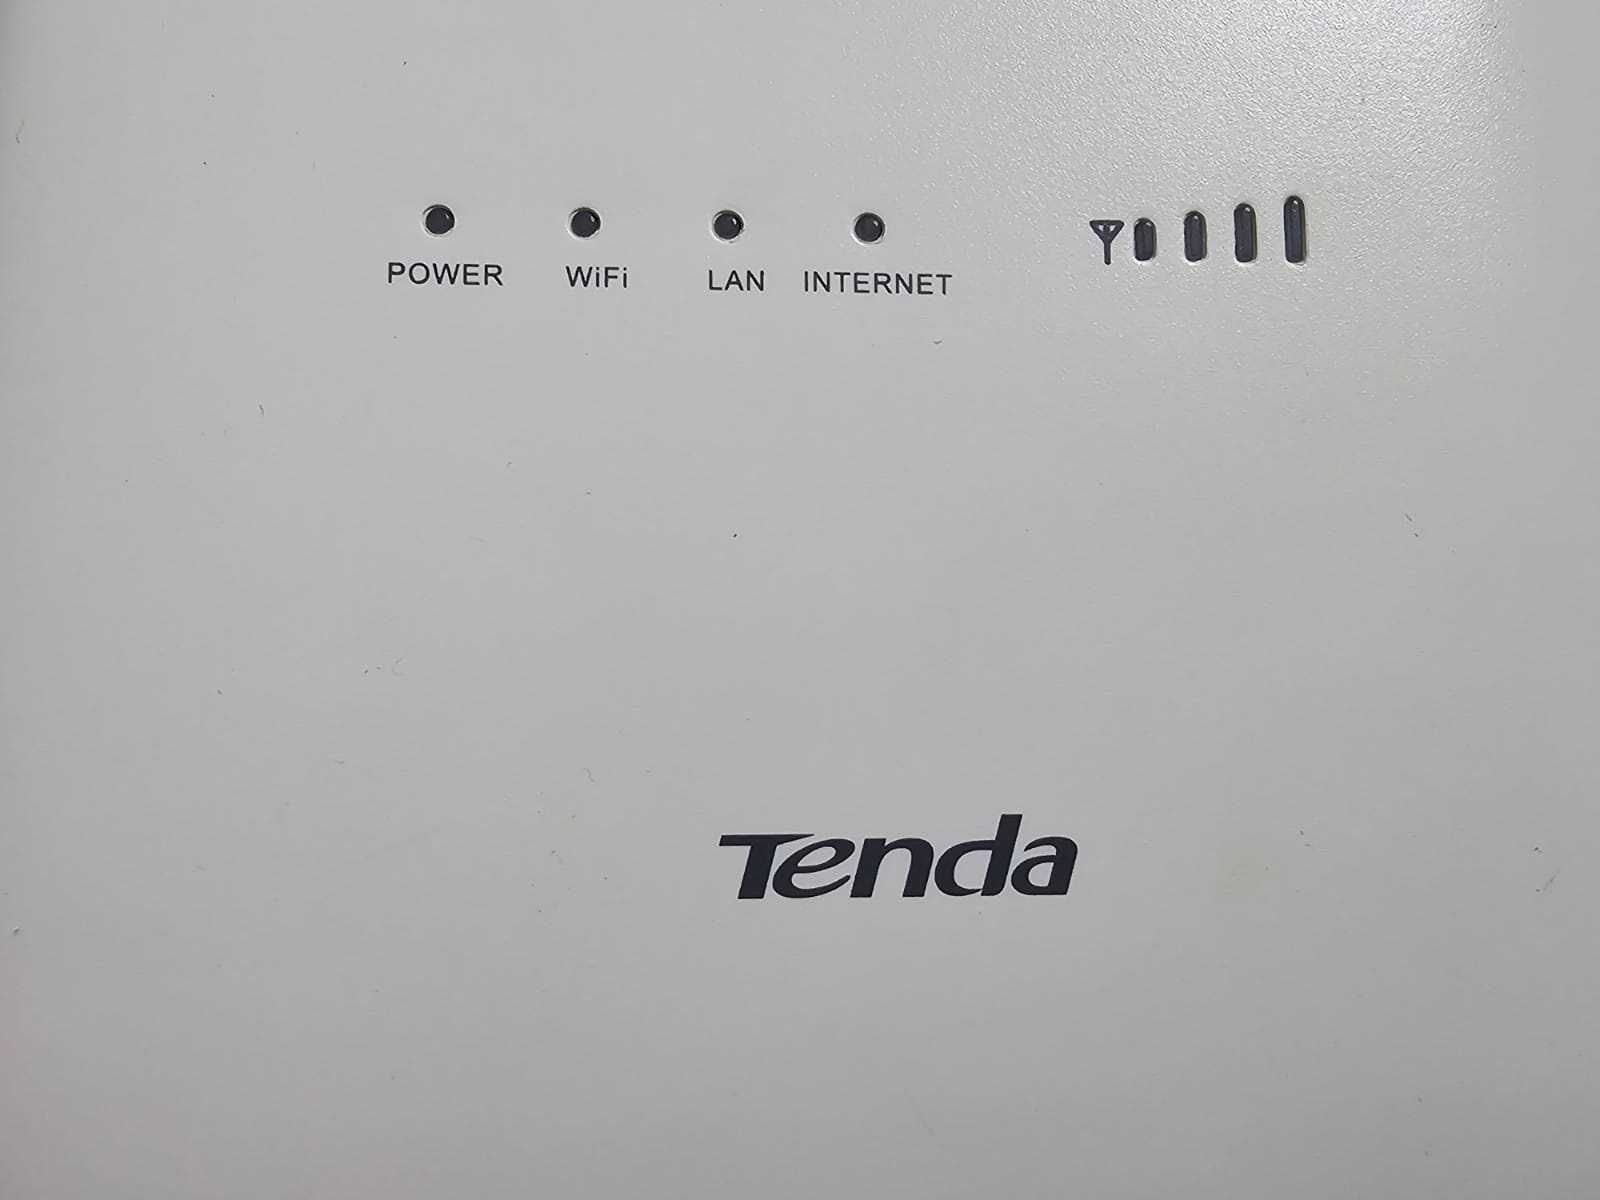 Router Wireless TENDA 4G680 V2, 300 Mbps, 4G LTE & VoLTE, alb